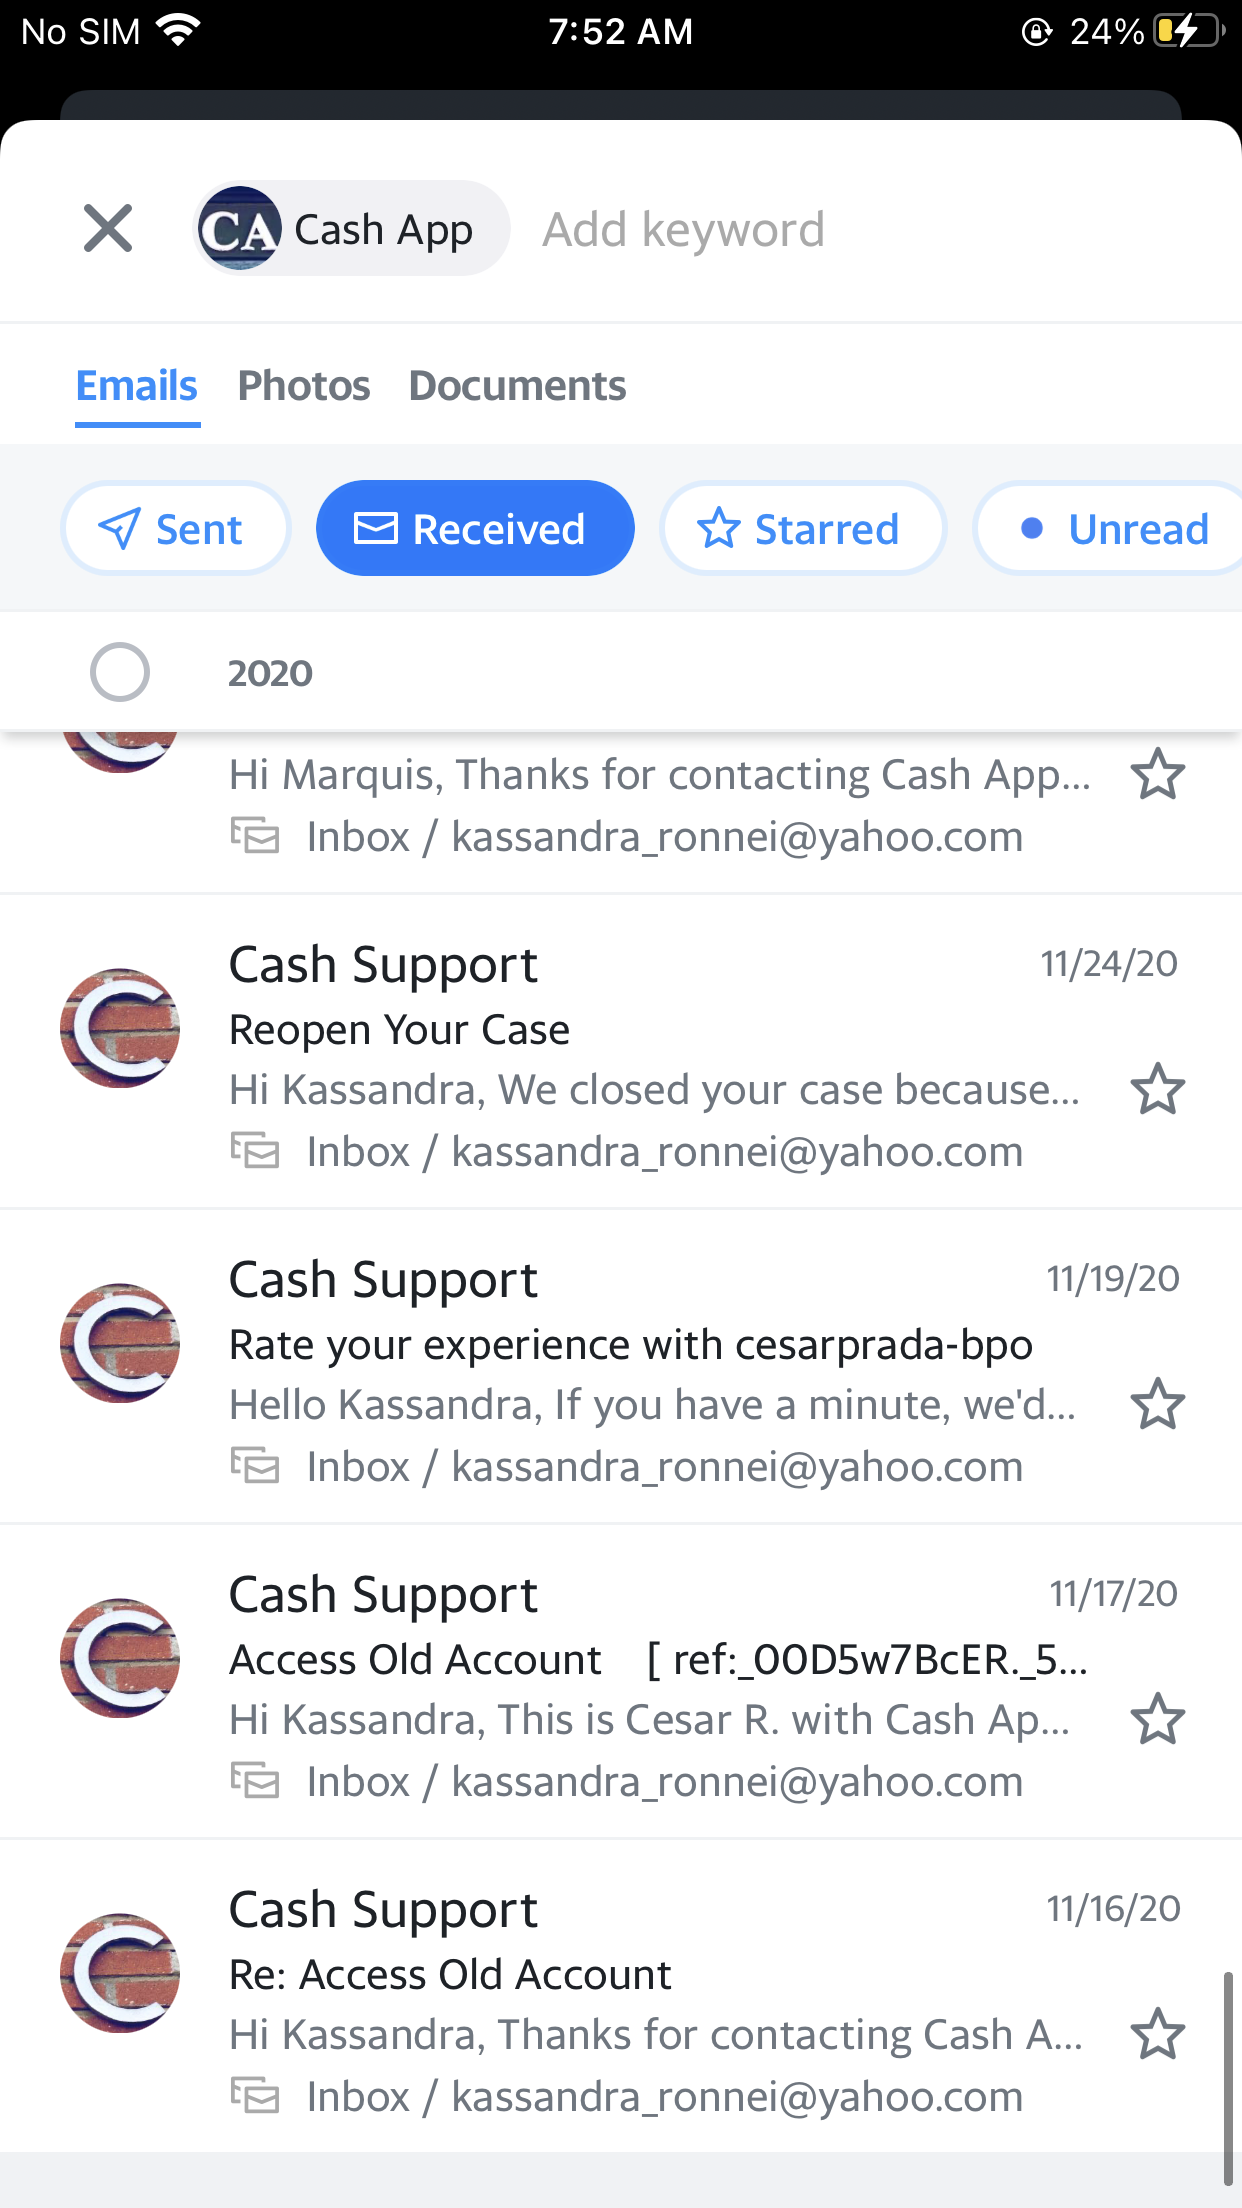 Cash App complaint Can’t access old account